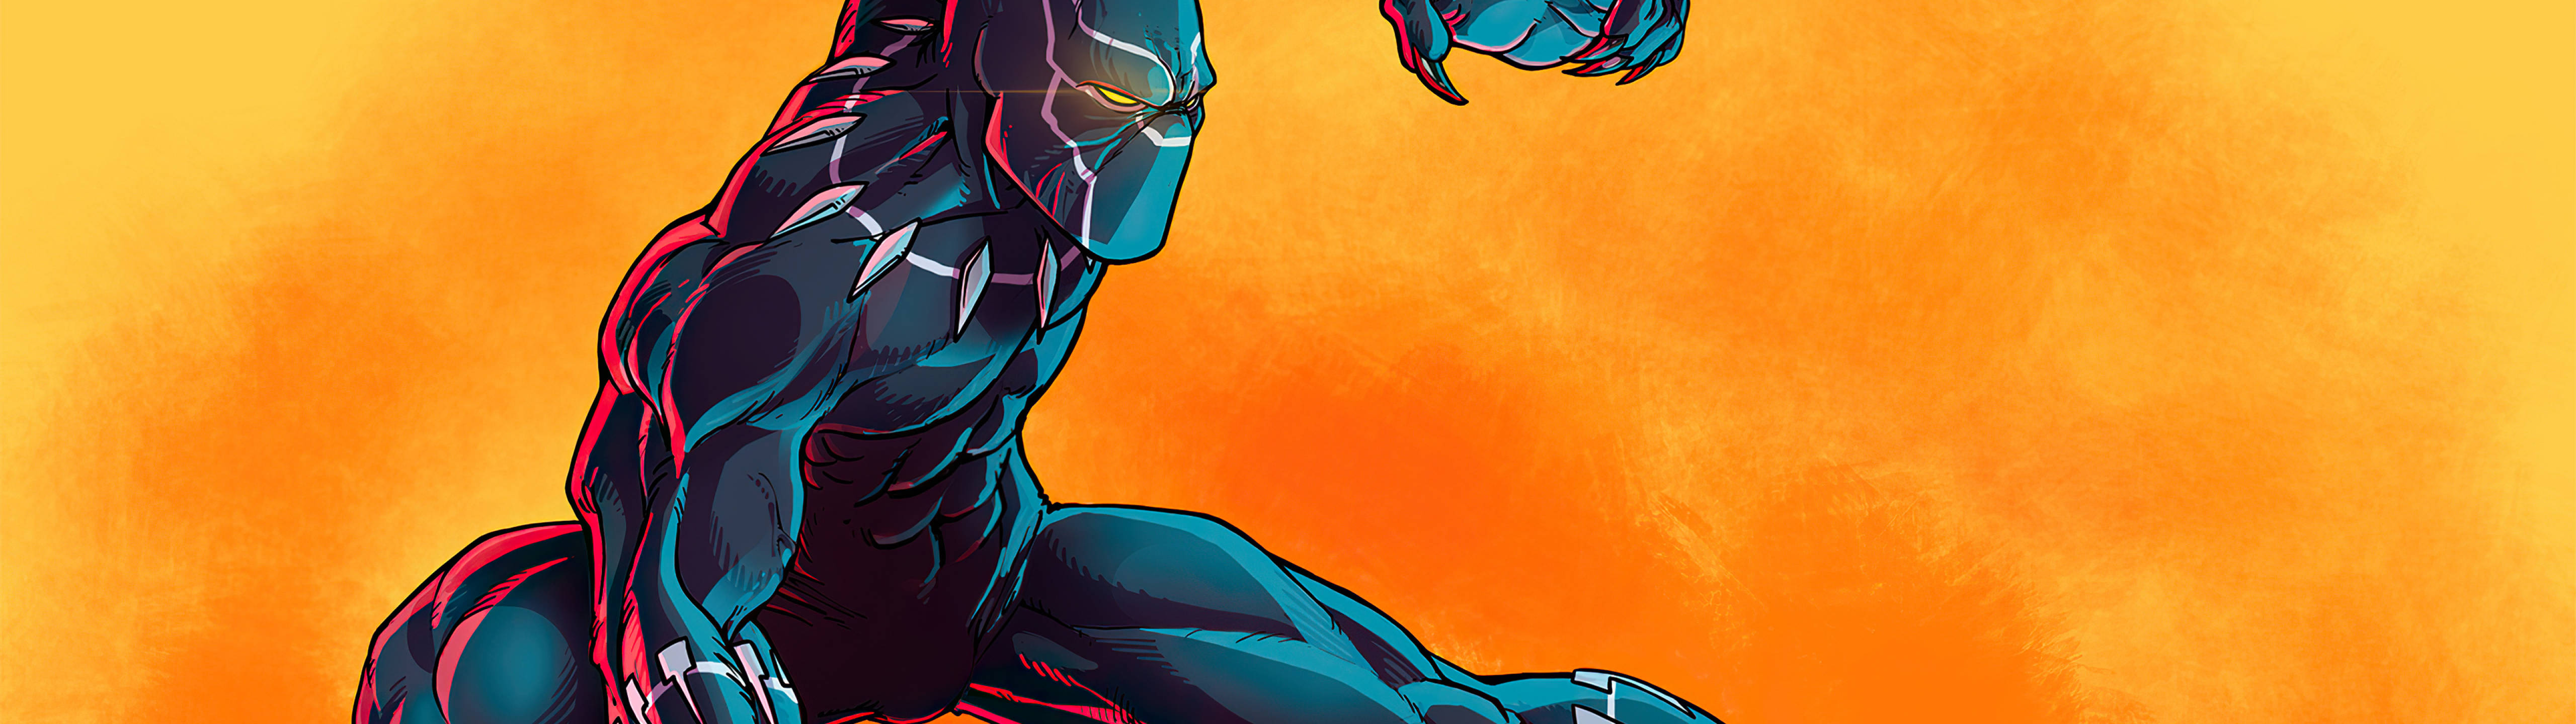 Marvel's Black Panther 5120 X 1440 Wallpaper